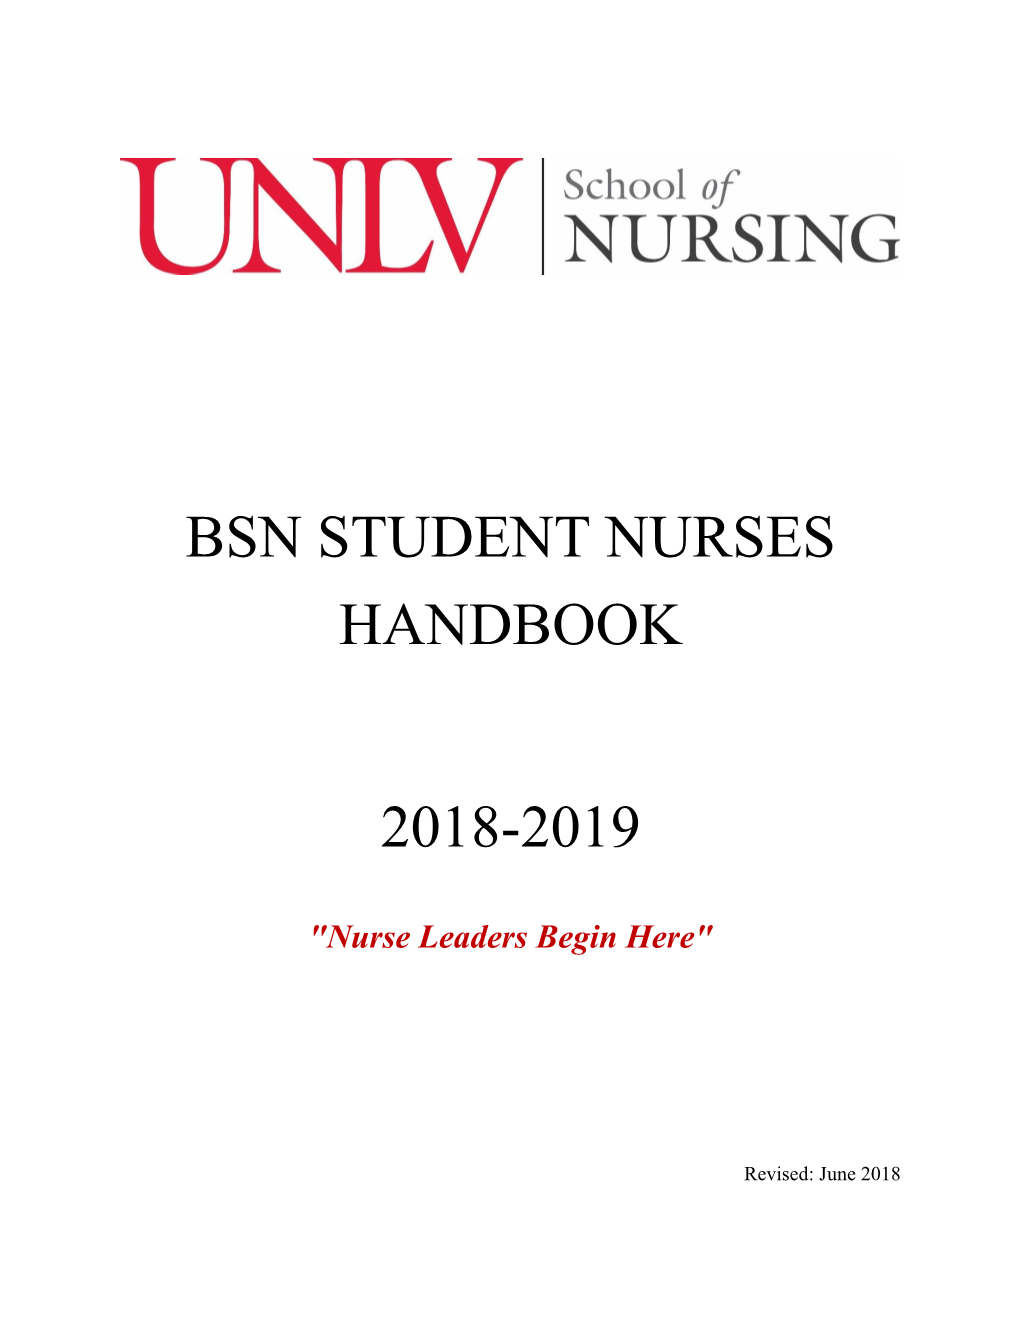 Bsn Student Nurses Handbook 2018-2019